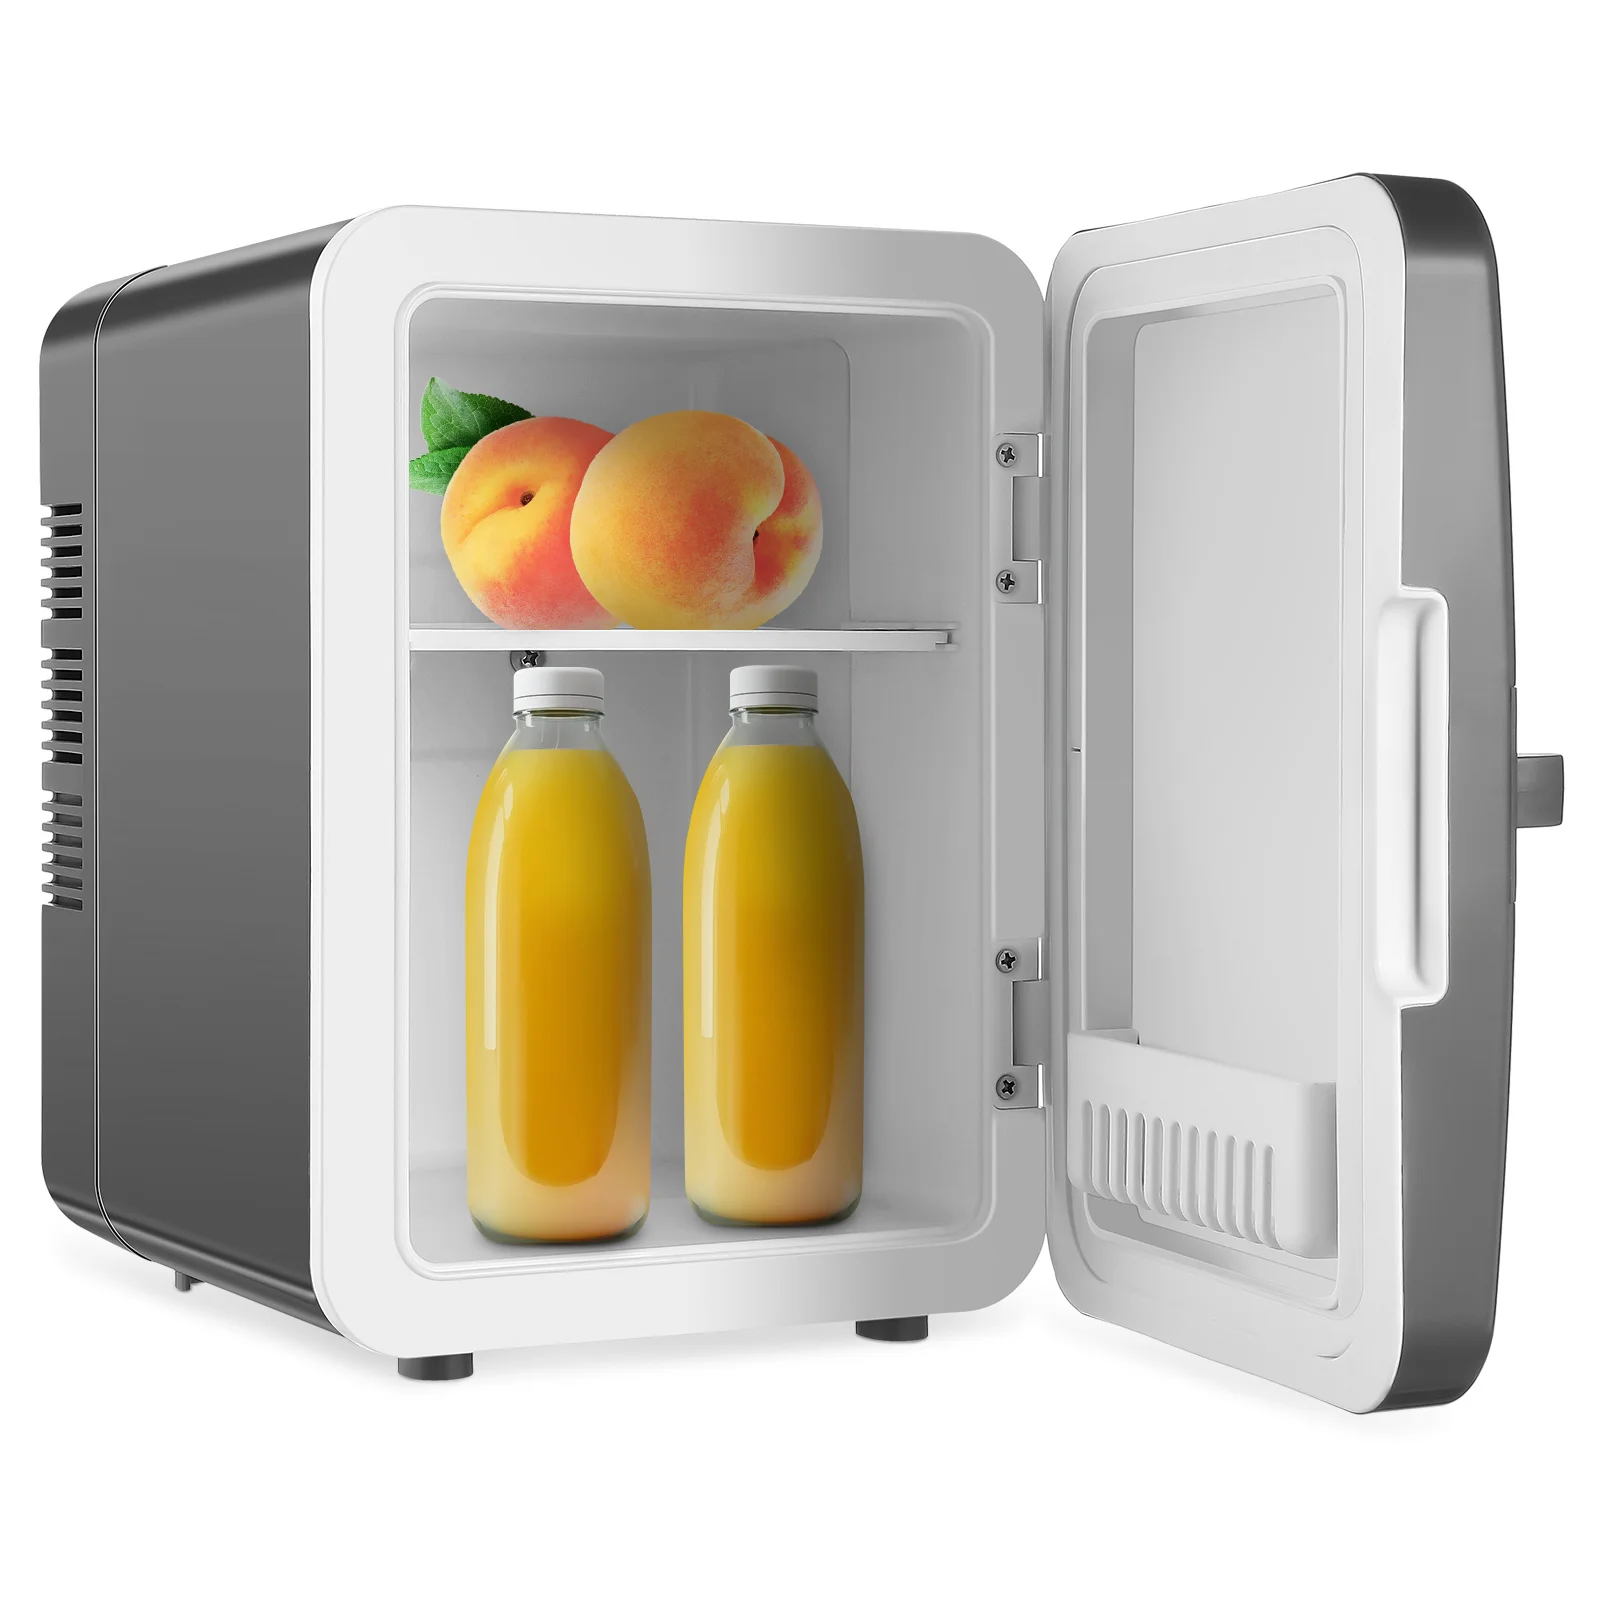 

Mini Fridge Skincare Fridge Beauty Fridge Portable Car Refrigerator Fridge For Office Bedroom With UK Plug